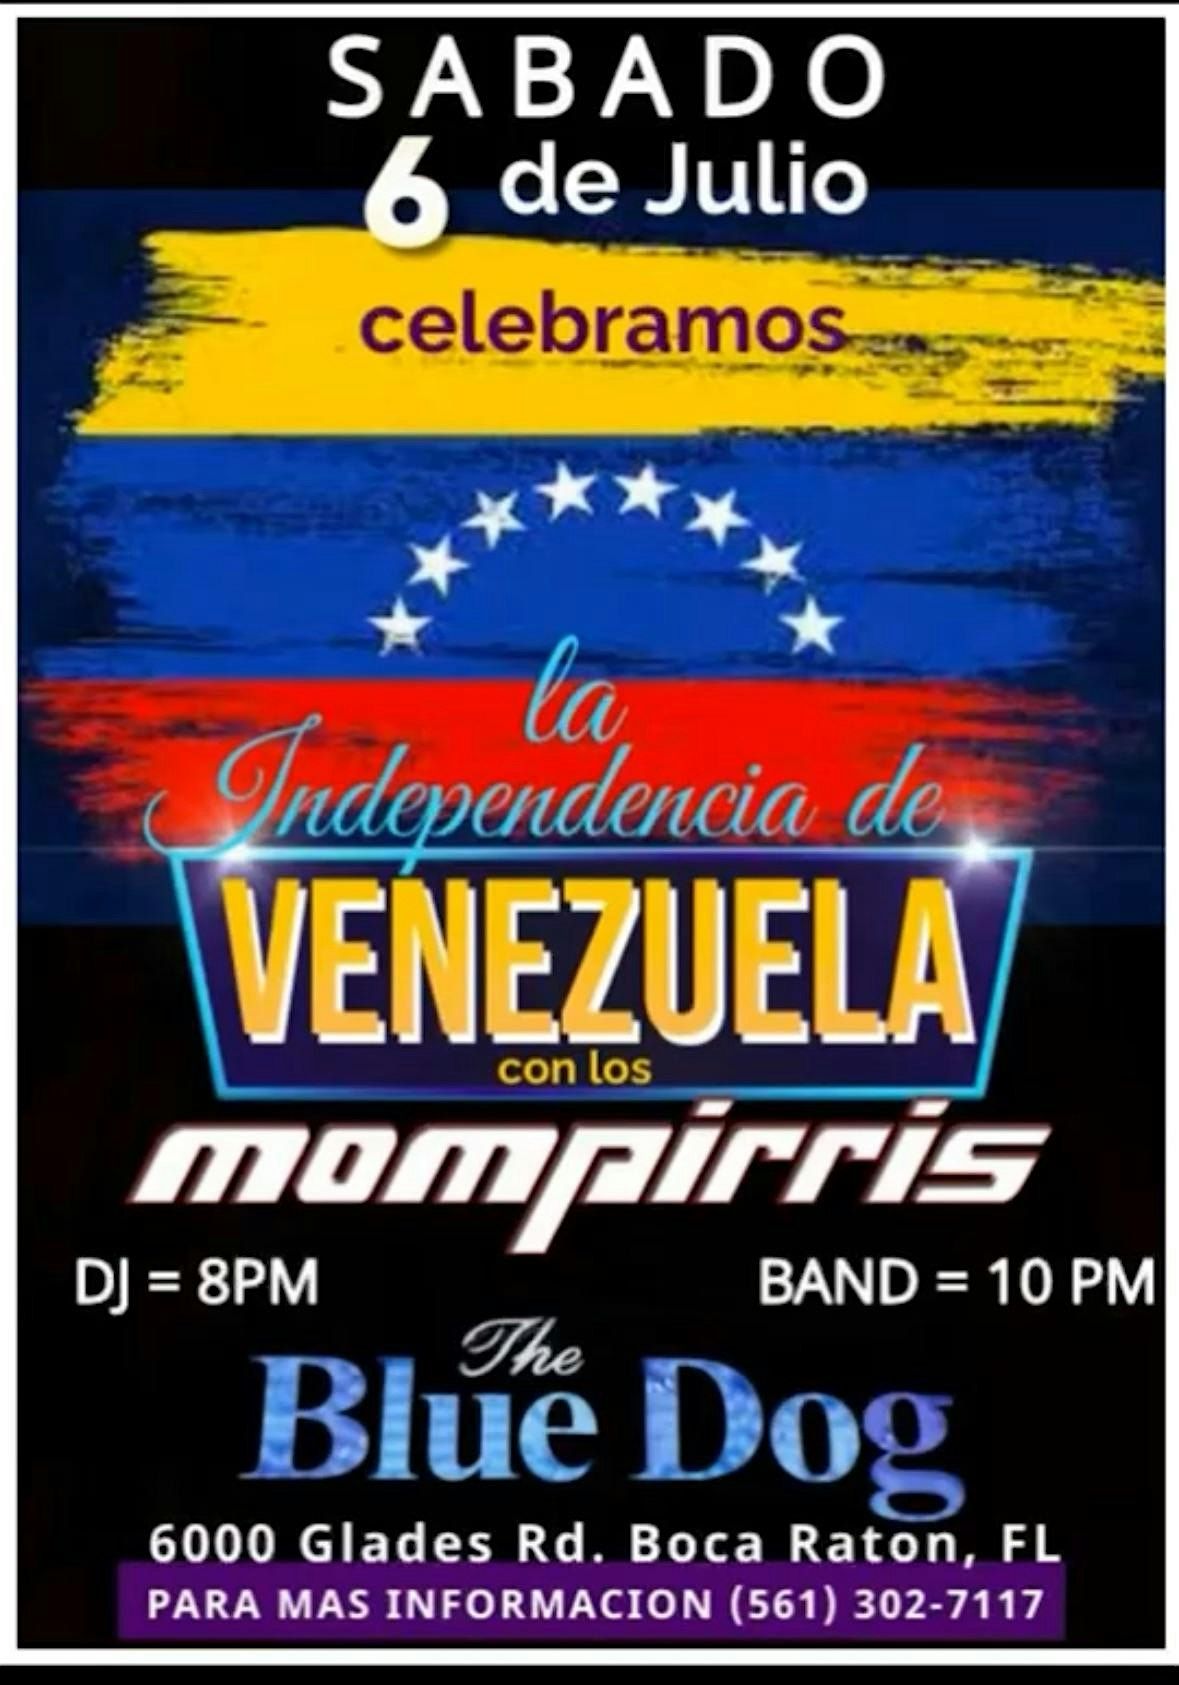 Venezuela Independence day Bash @ THE BLUE DOG BOCA Saturday July 6th